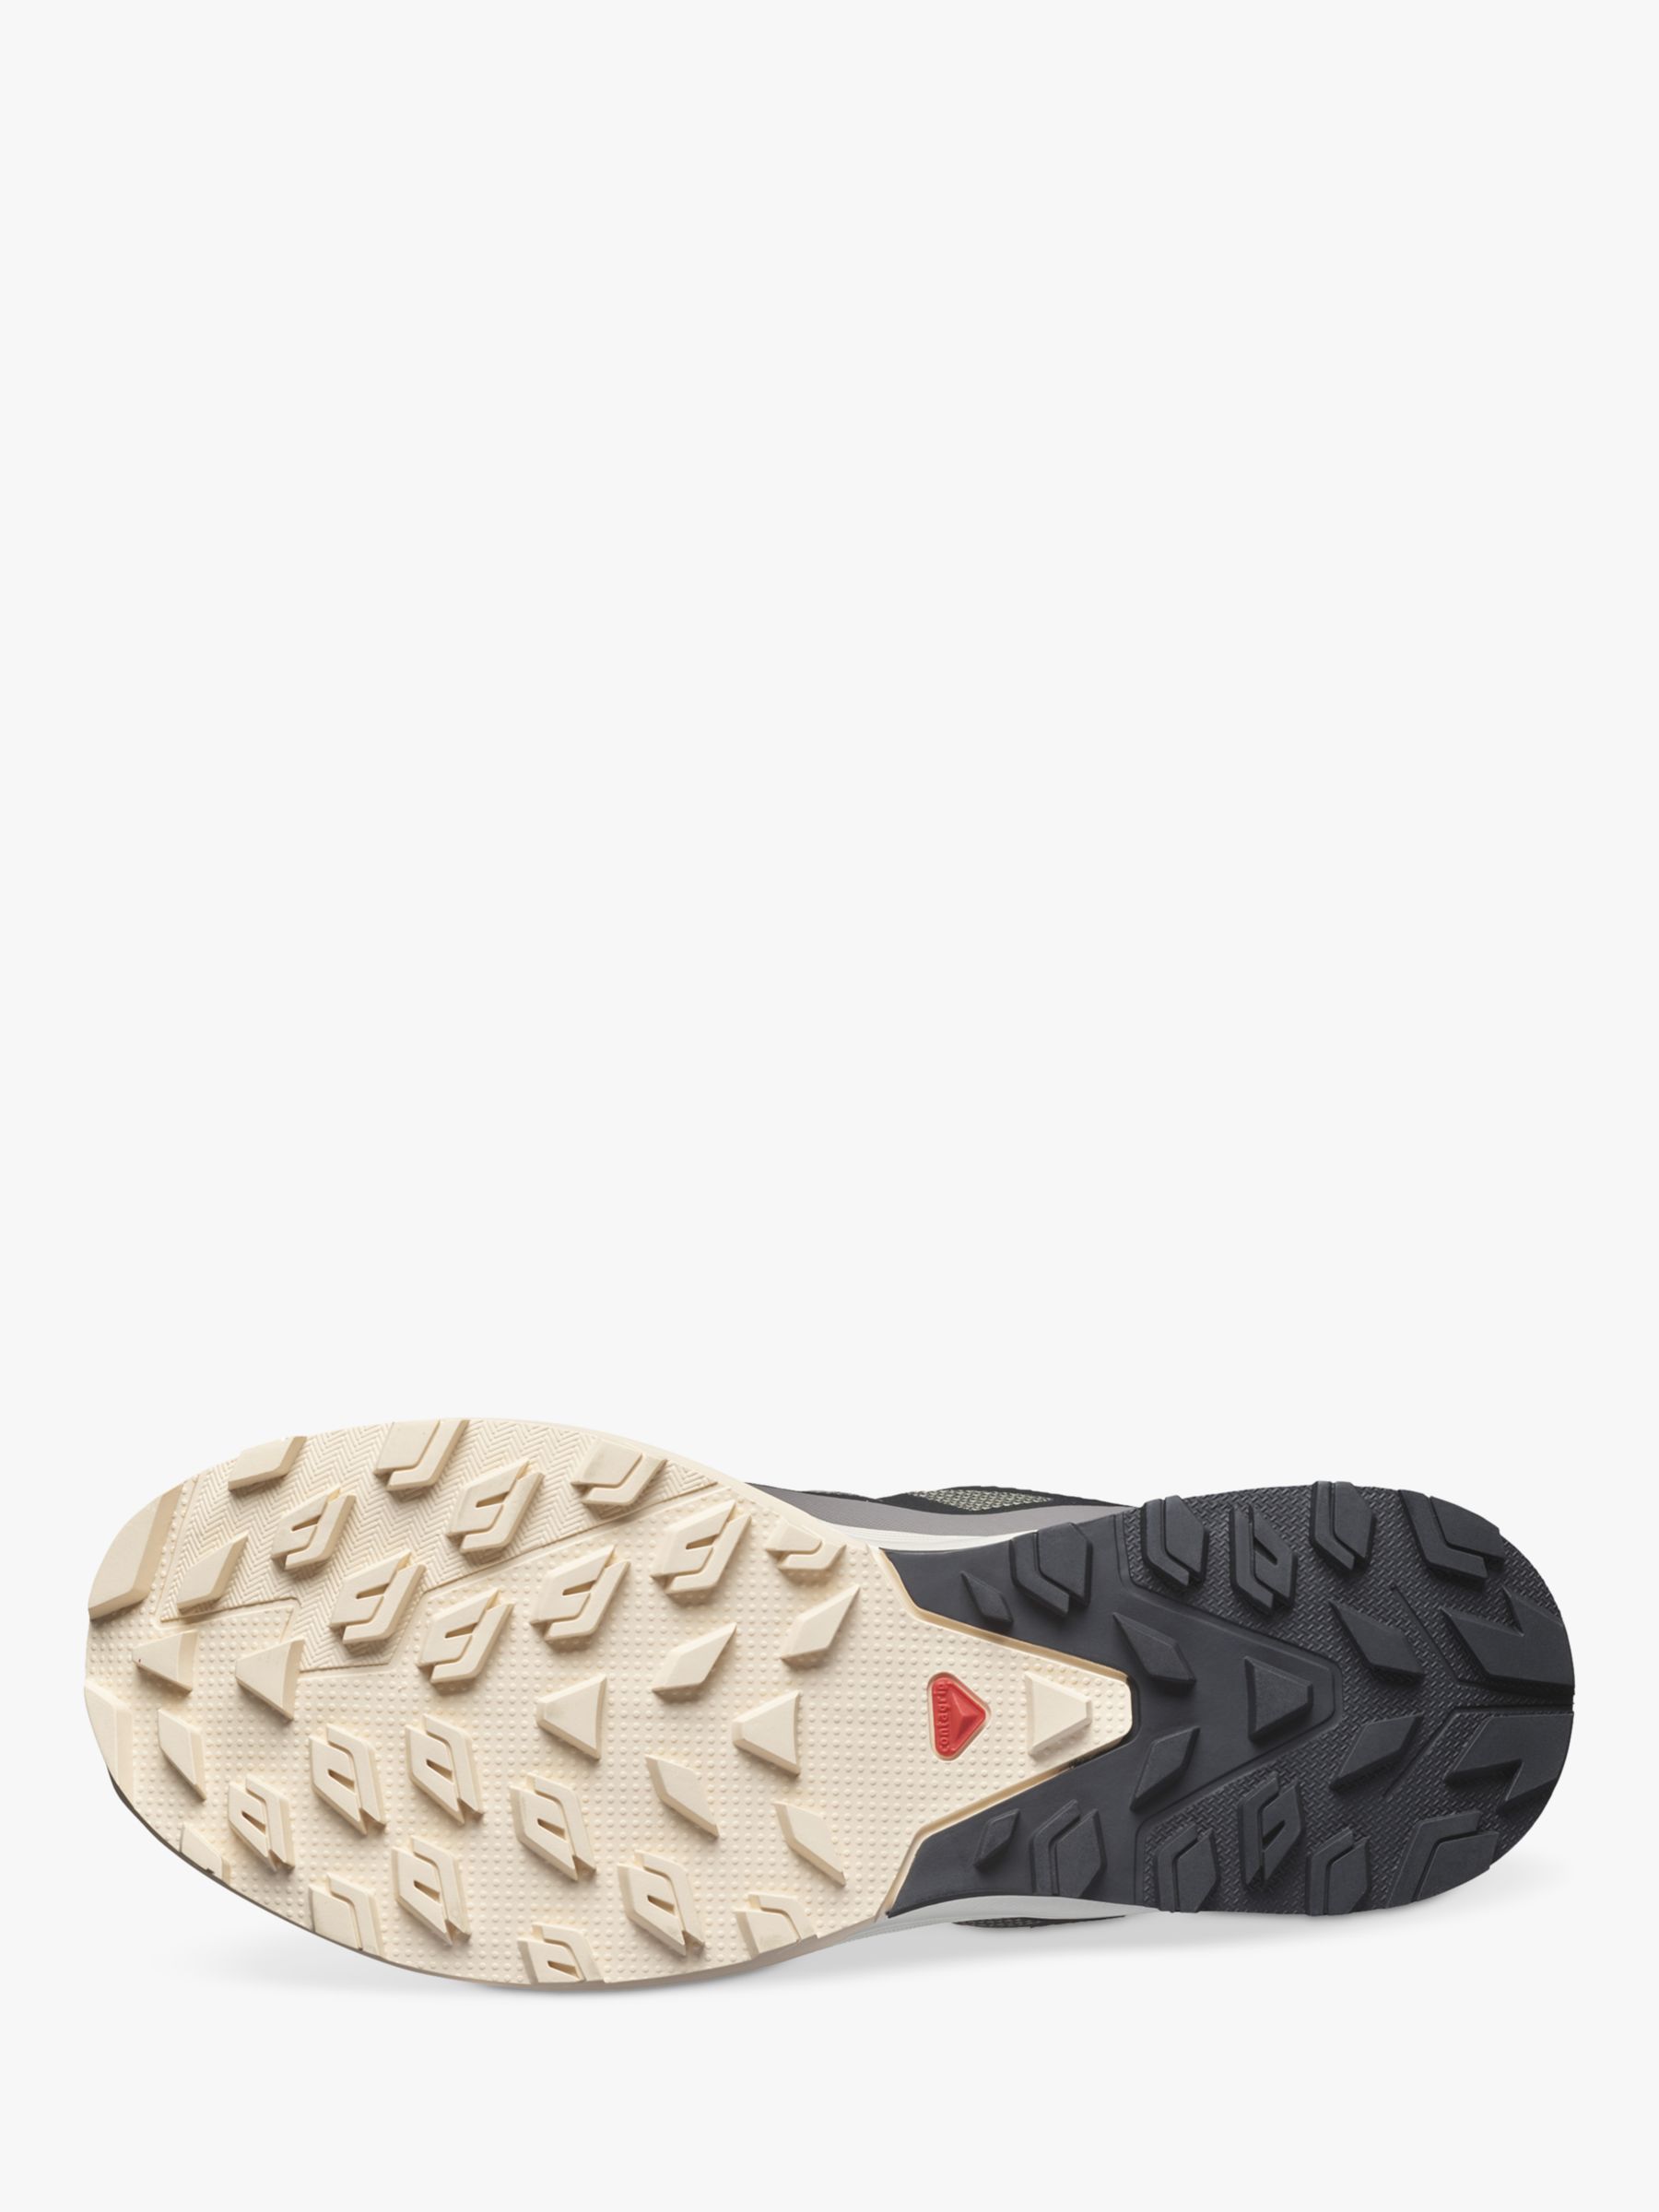 Salomon Outrise Women's Waterproof Gore-Tex Hiking Shoes, Magnet/Black, 4